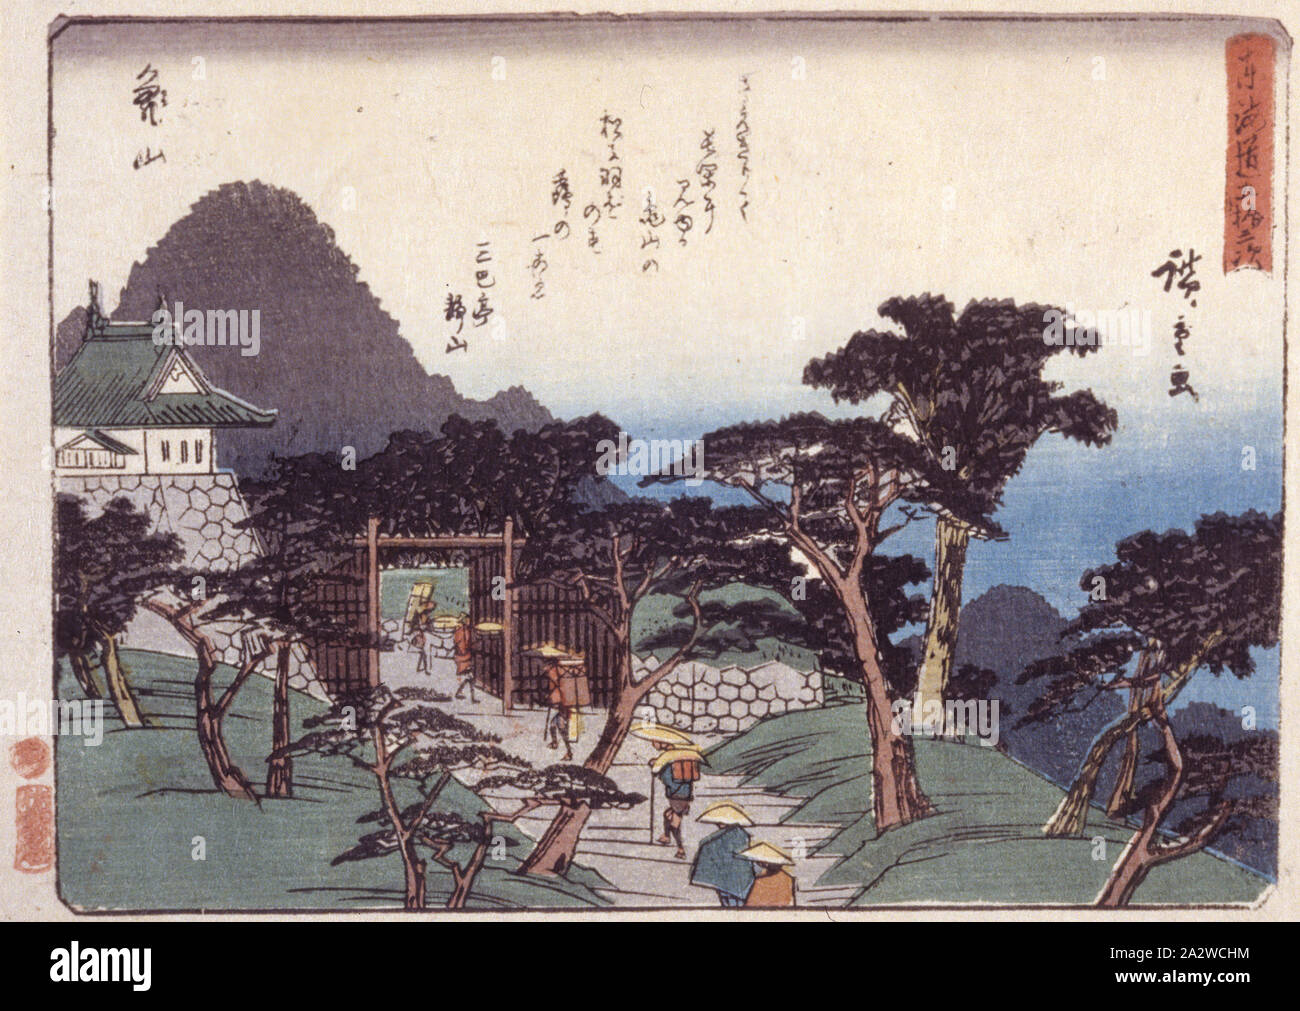 Antique 2 prints of Asian art set 1906 color lithograph print size ca 9,4x6,1 beautiful gift item